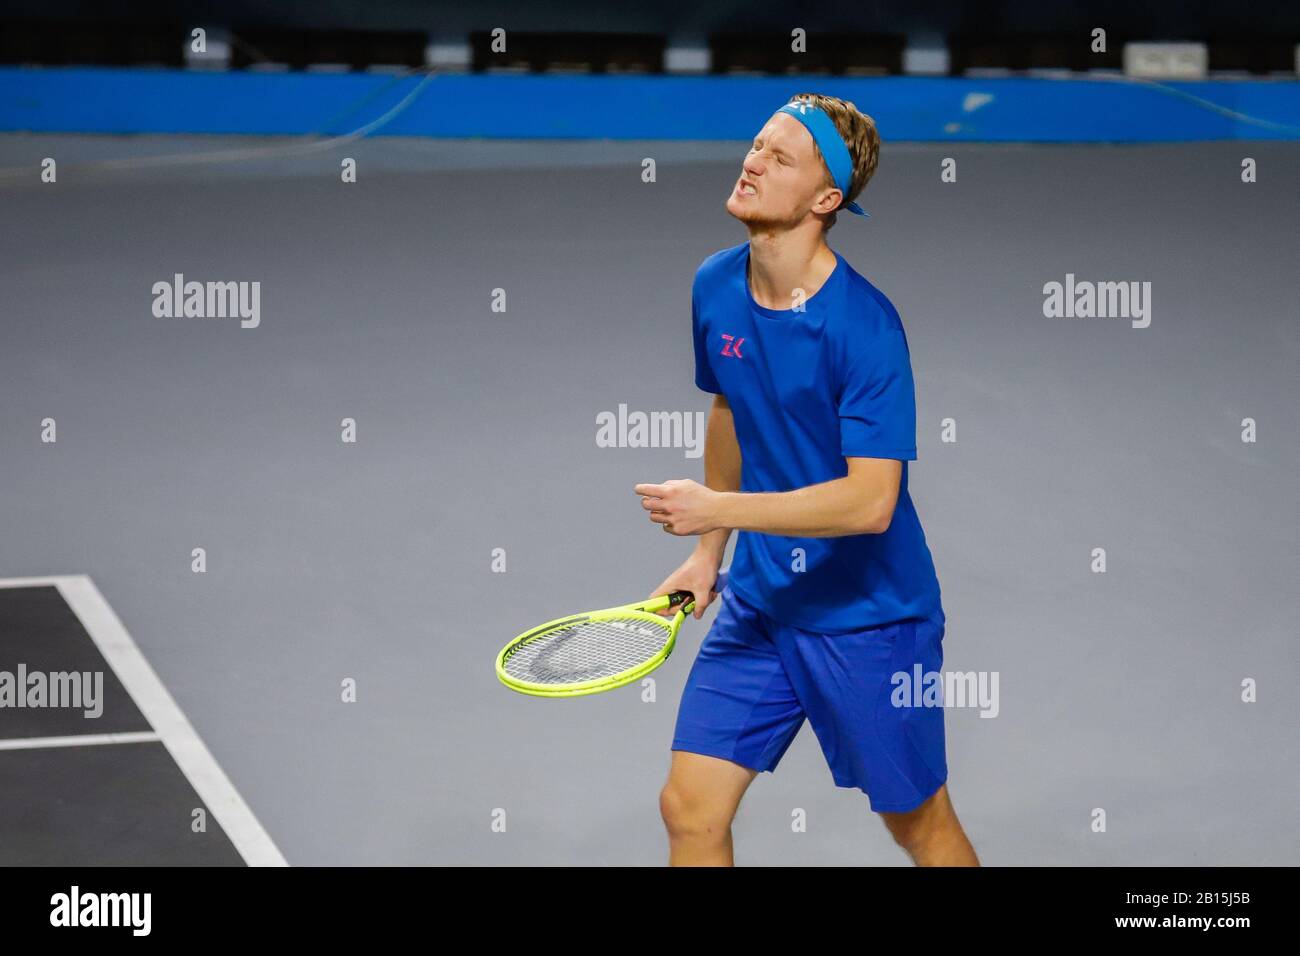 zdenek kolar during ATP Bergamo Challenger, Bergamo, Italy, 22 Feb 2020, Tennis  Tennis Internationals Stock Photo - Alamy